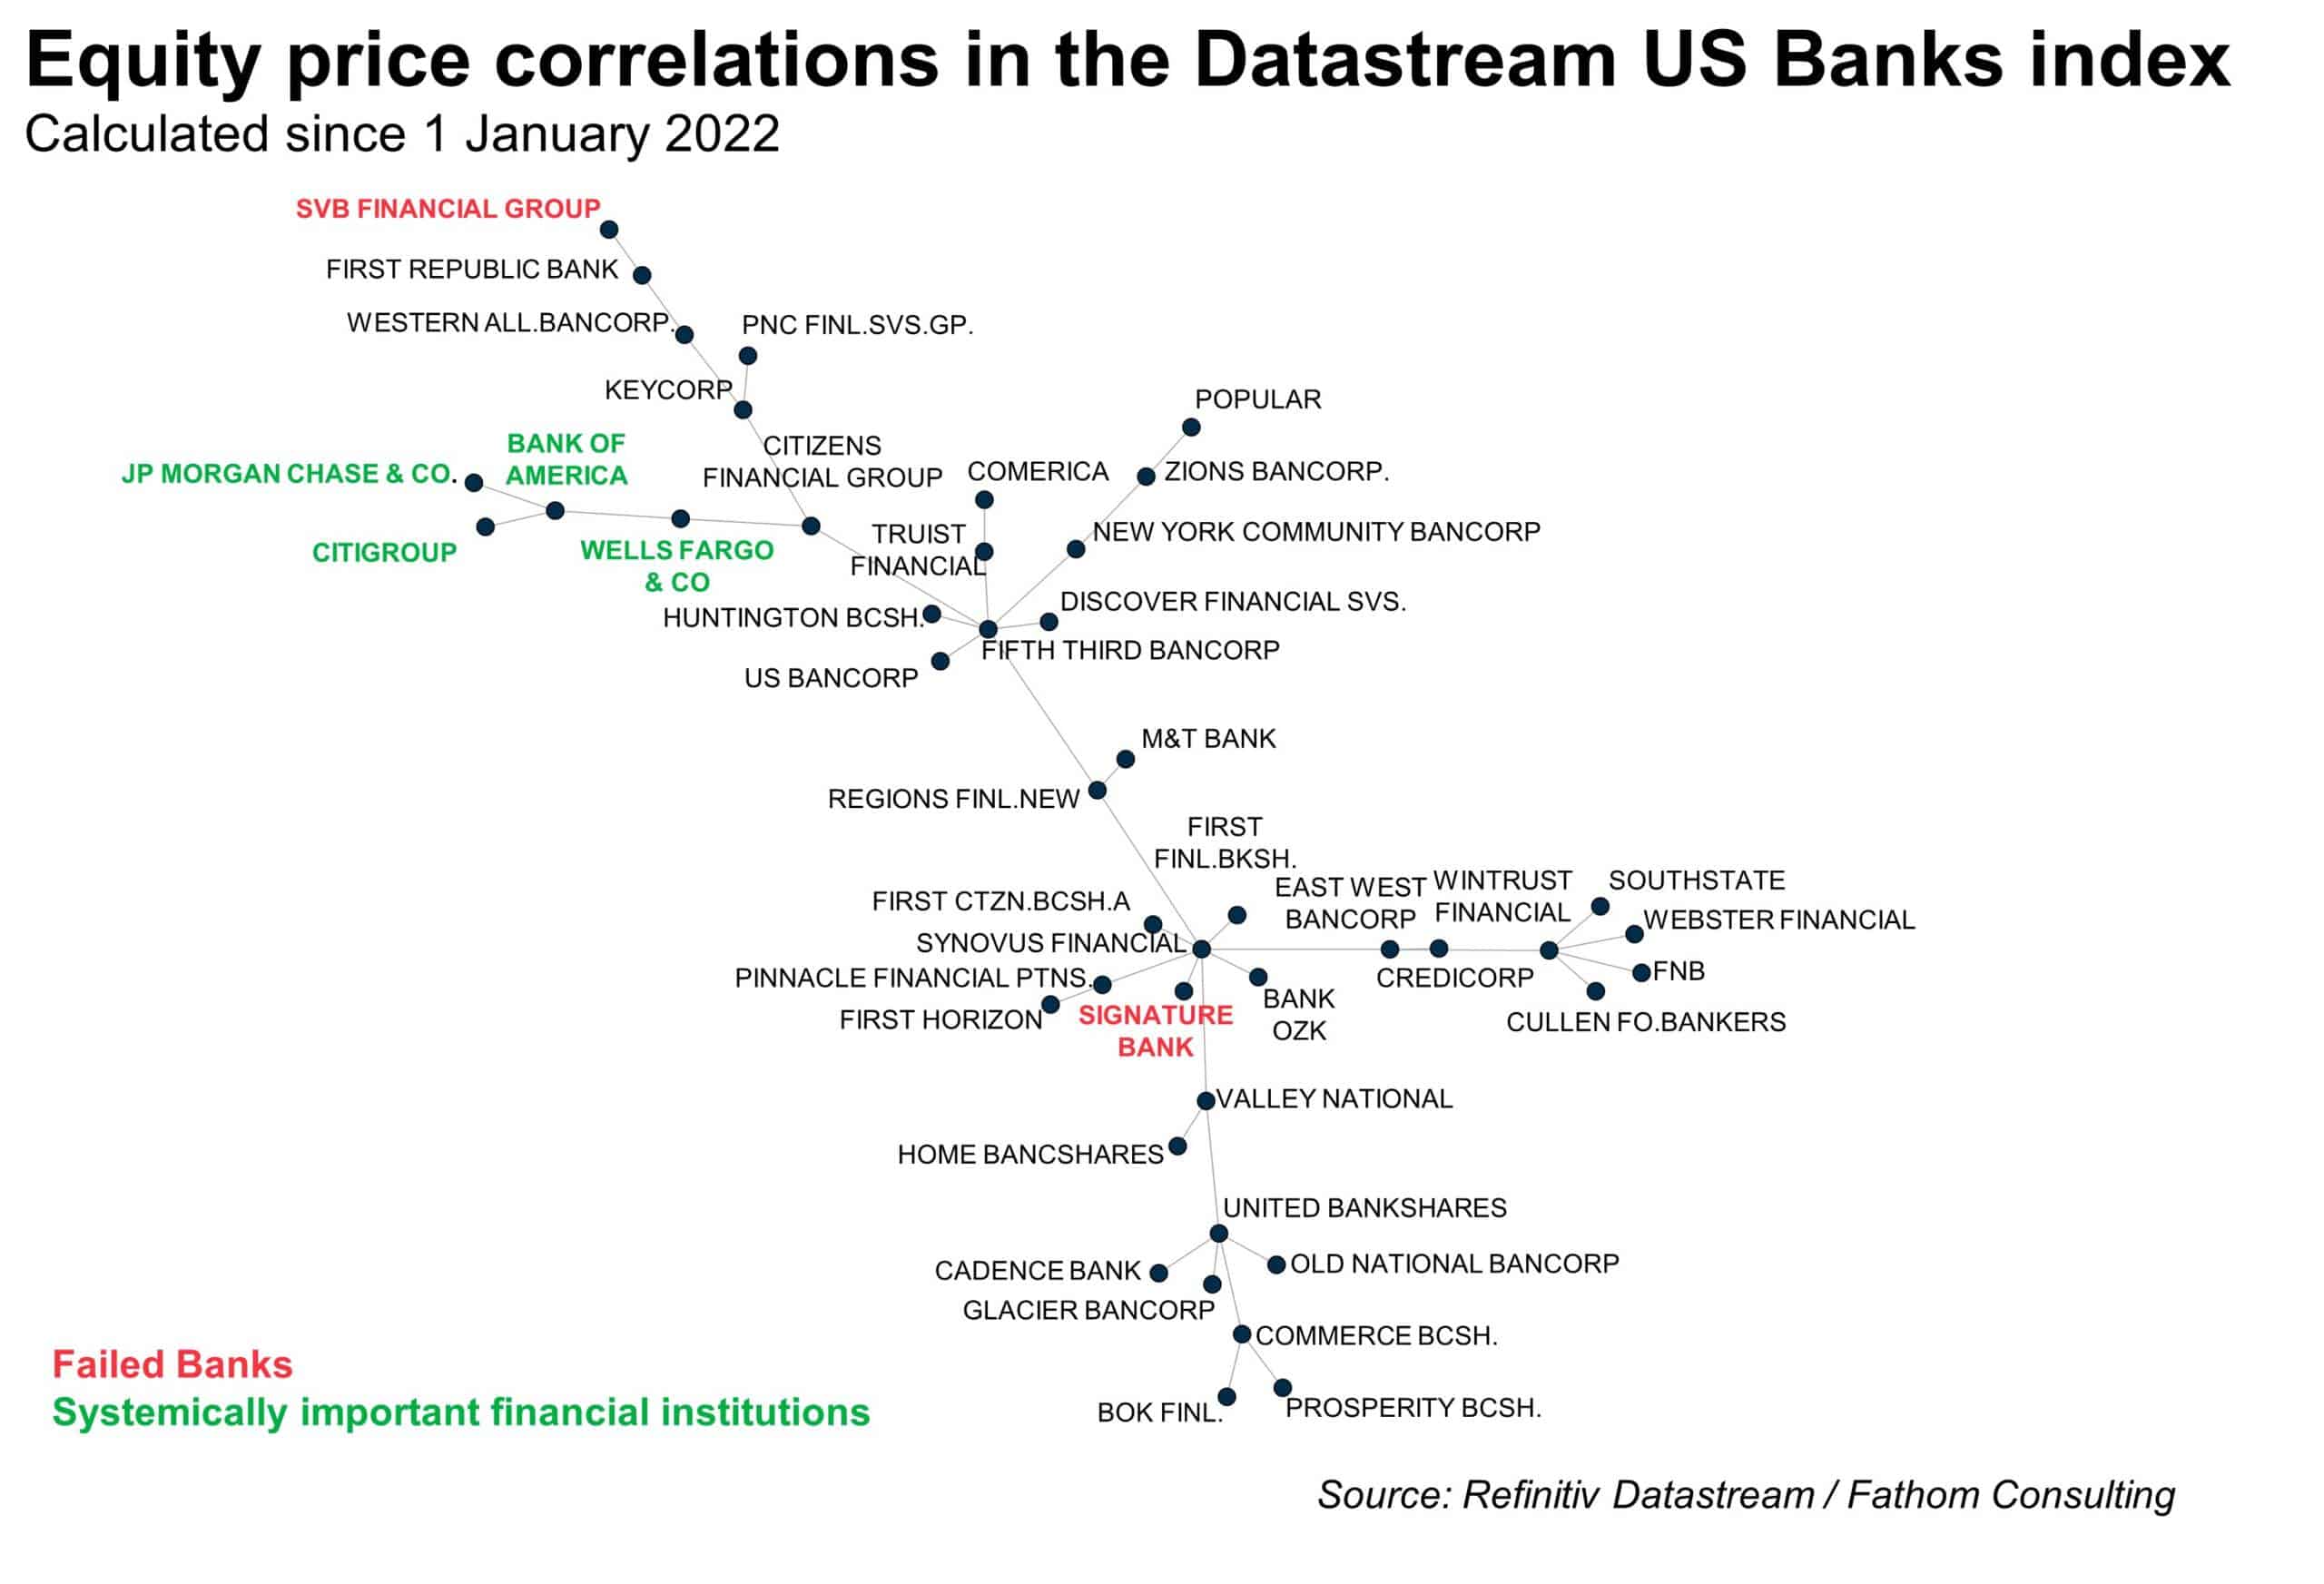 Contagion risks from failed US bank SVB